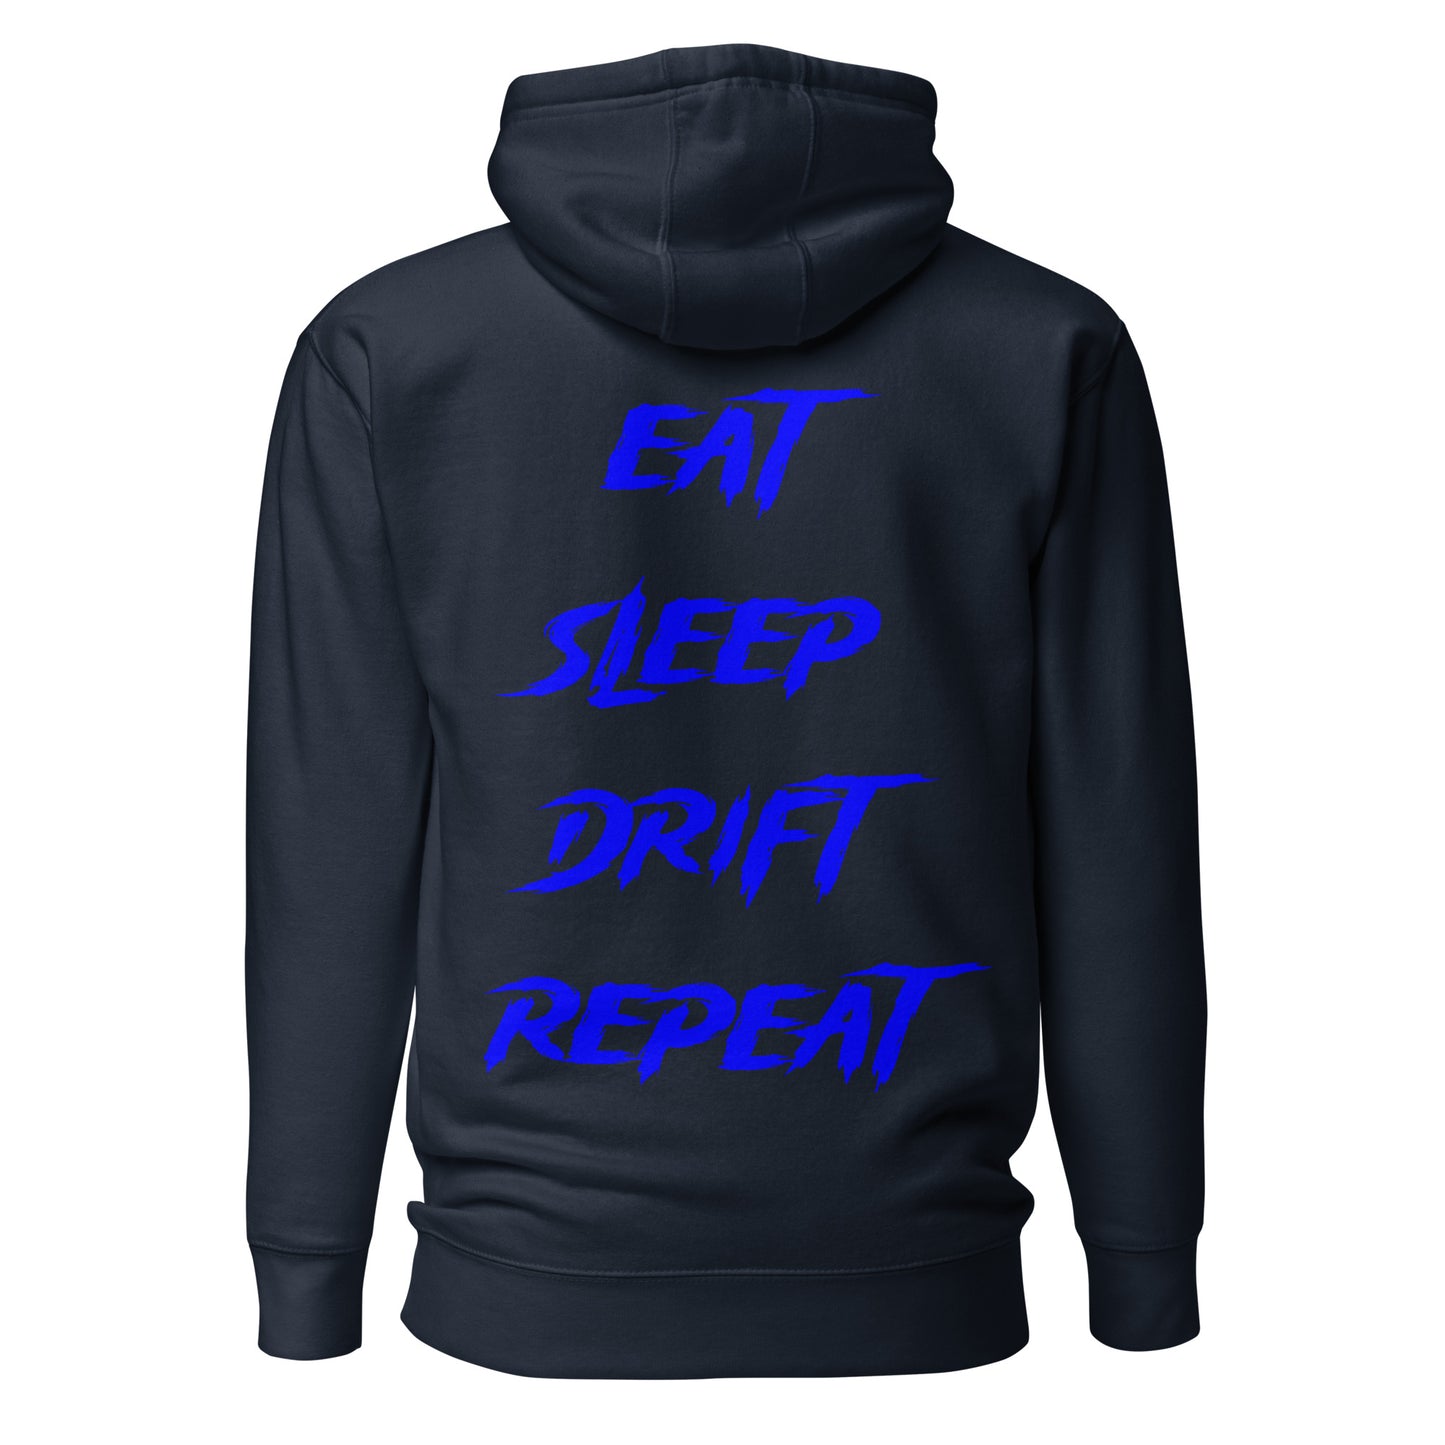 Eat Sleep Drift Repeat Blue